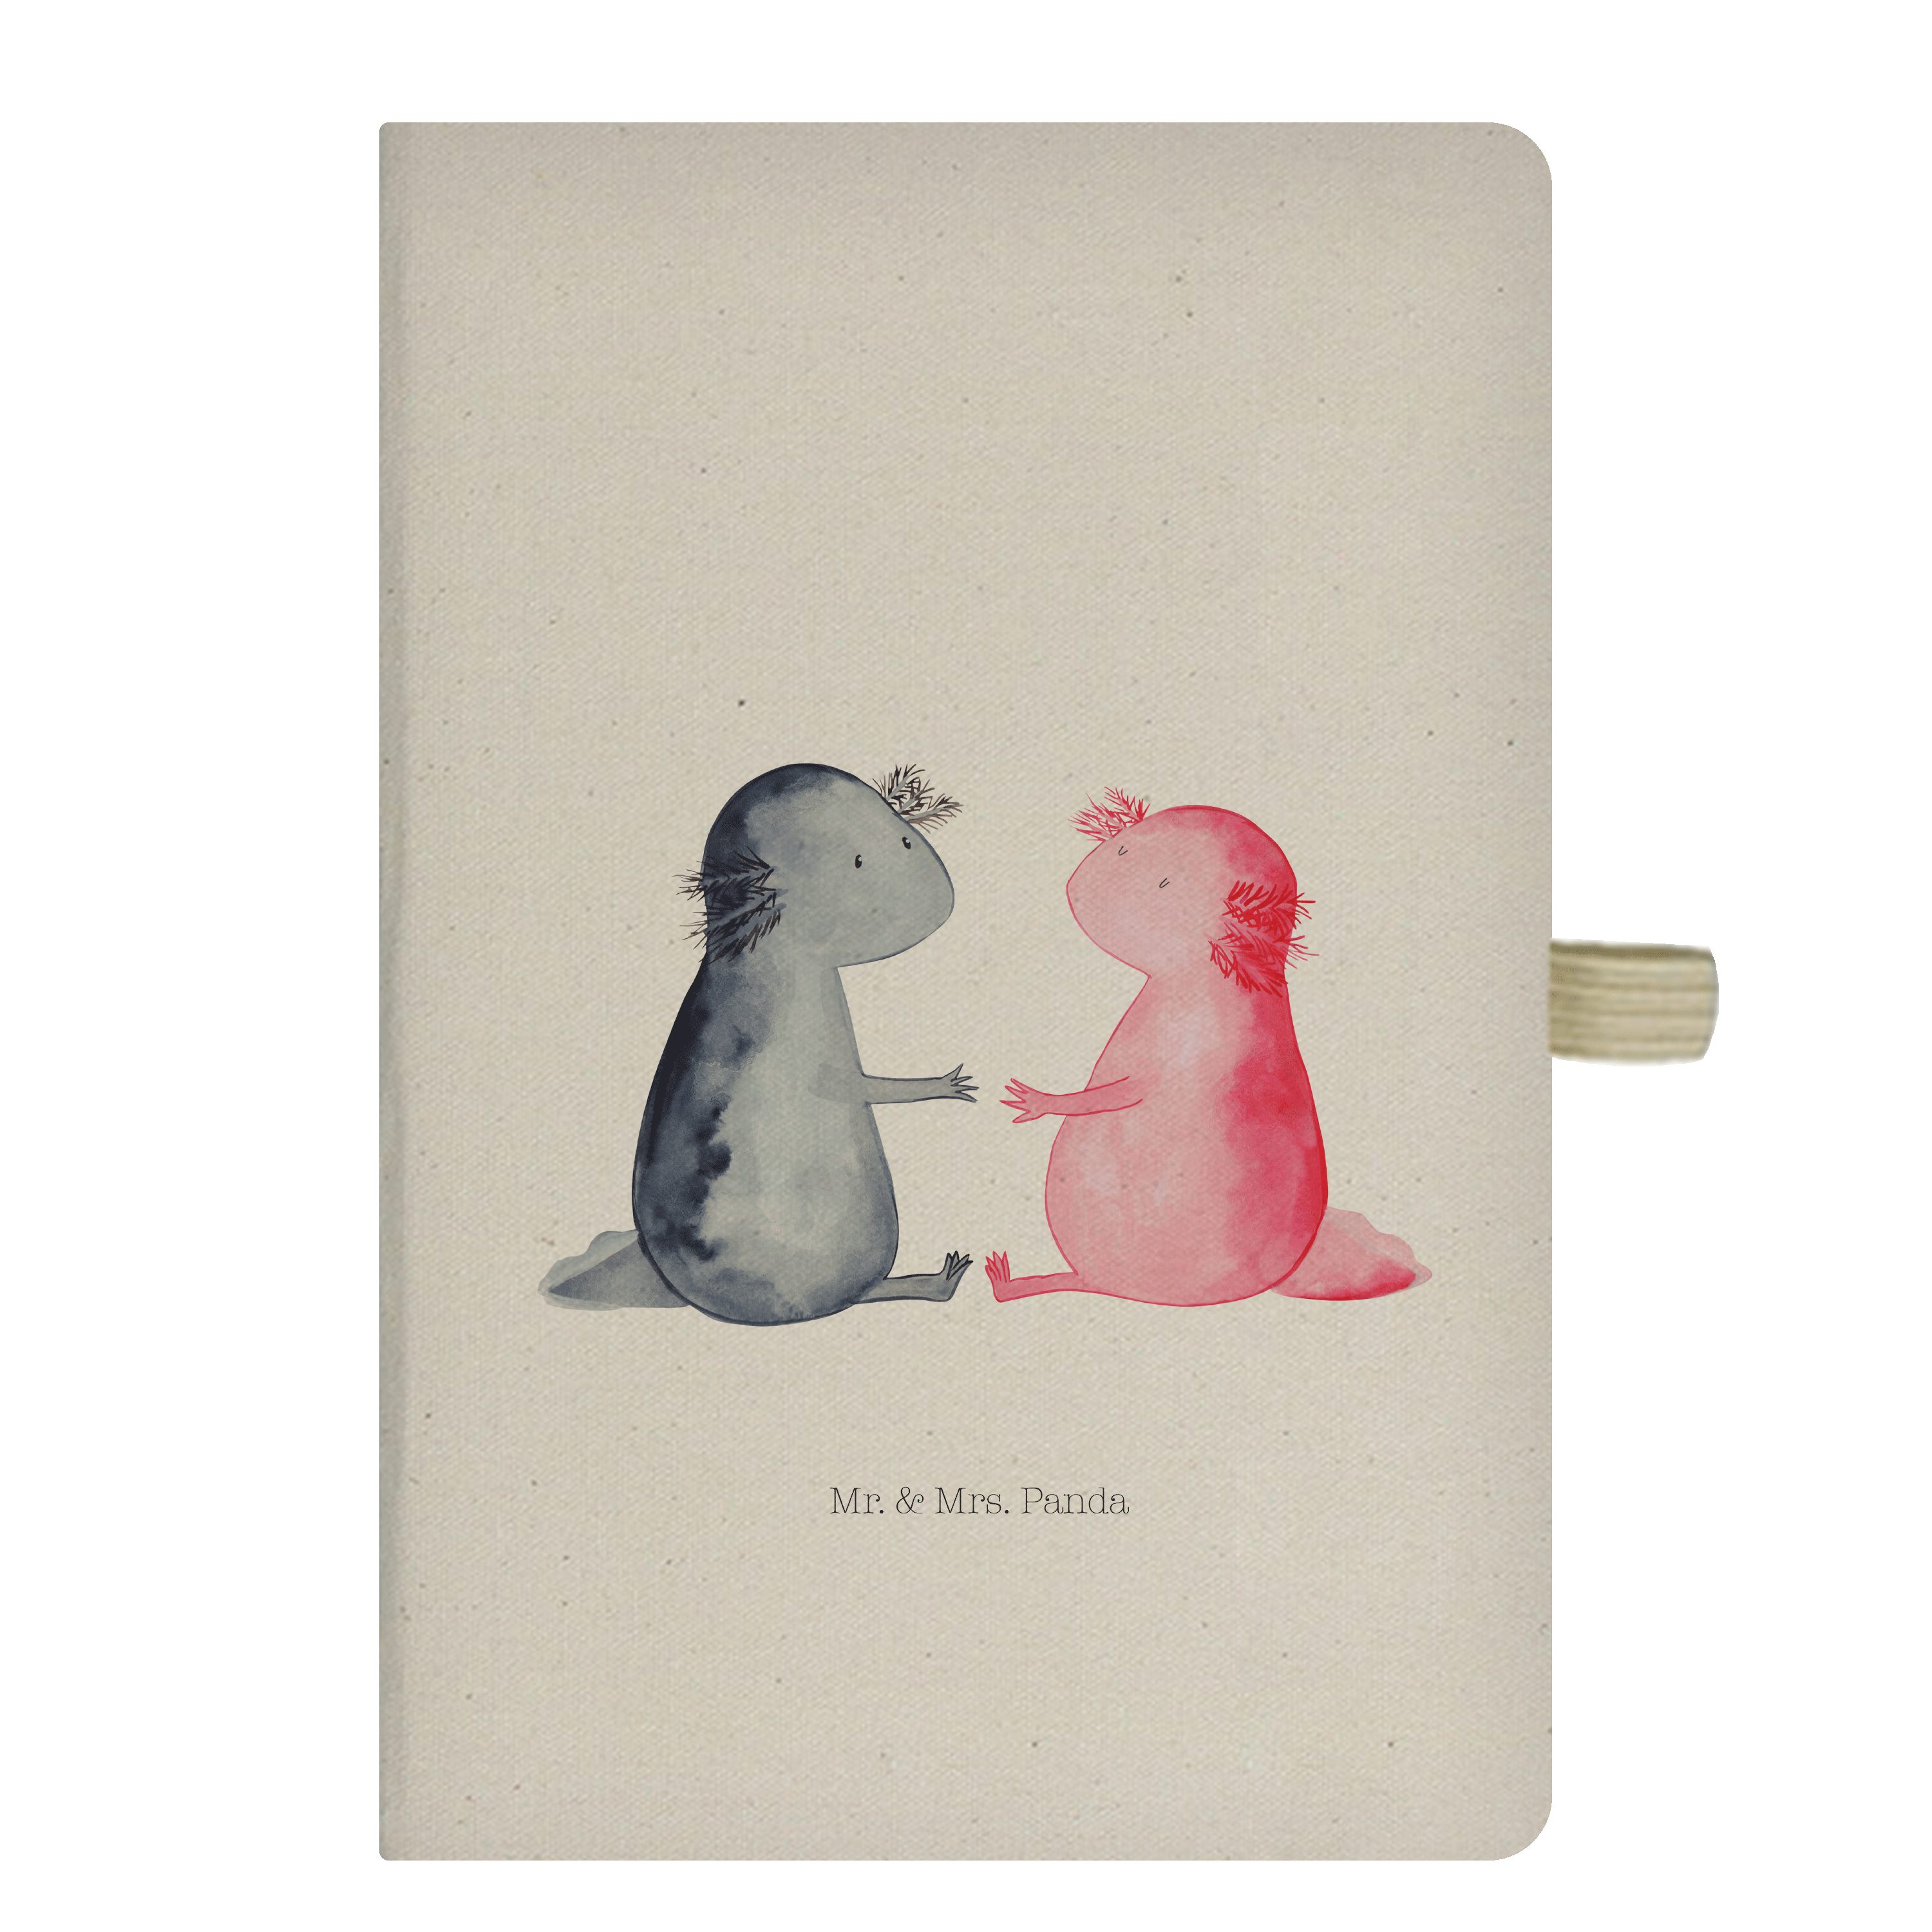 Geschenk, Panda & Transparent Mrs. Mr. Axolotl Mrs. Mr. Panda Notizbuch Schreibbuch, - No - & Liebe Eintragebuch,